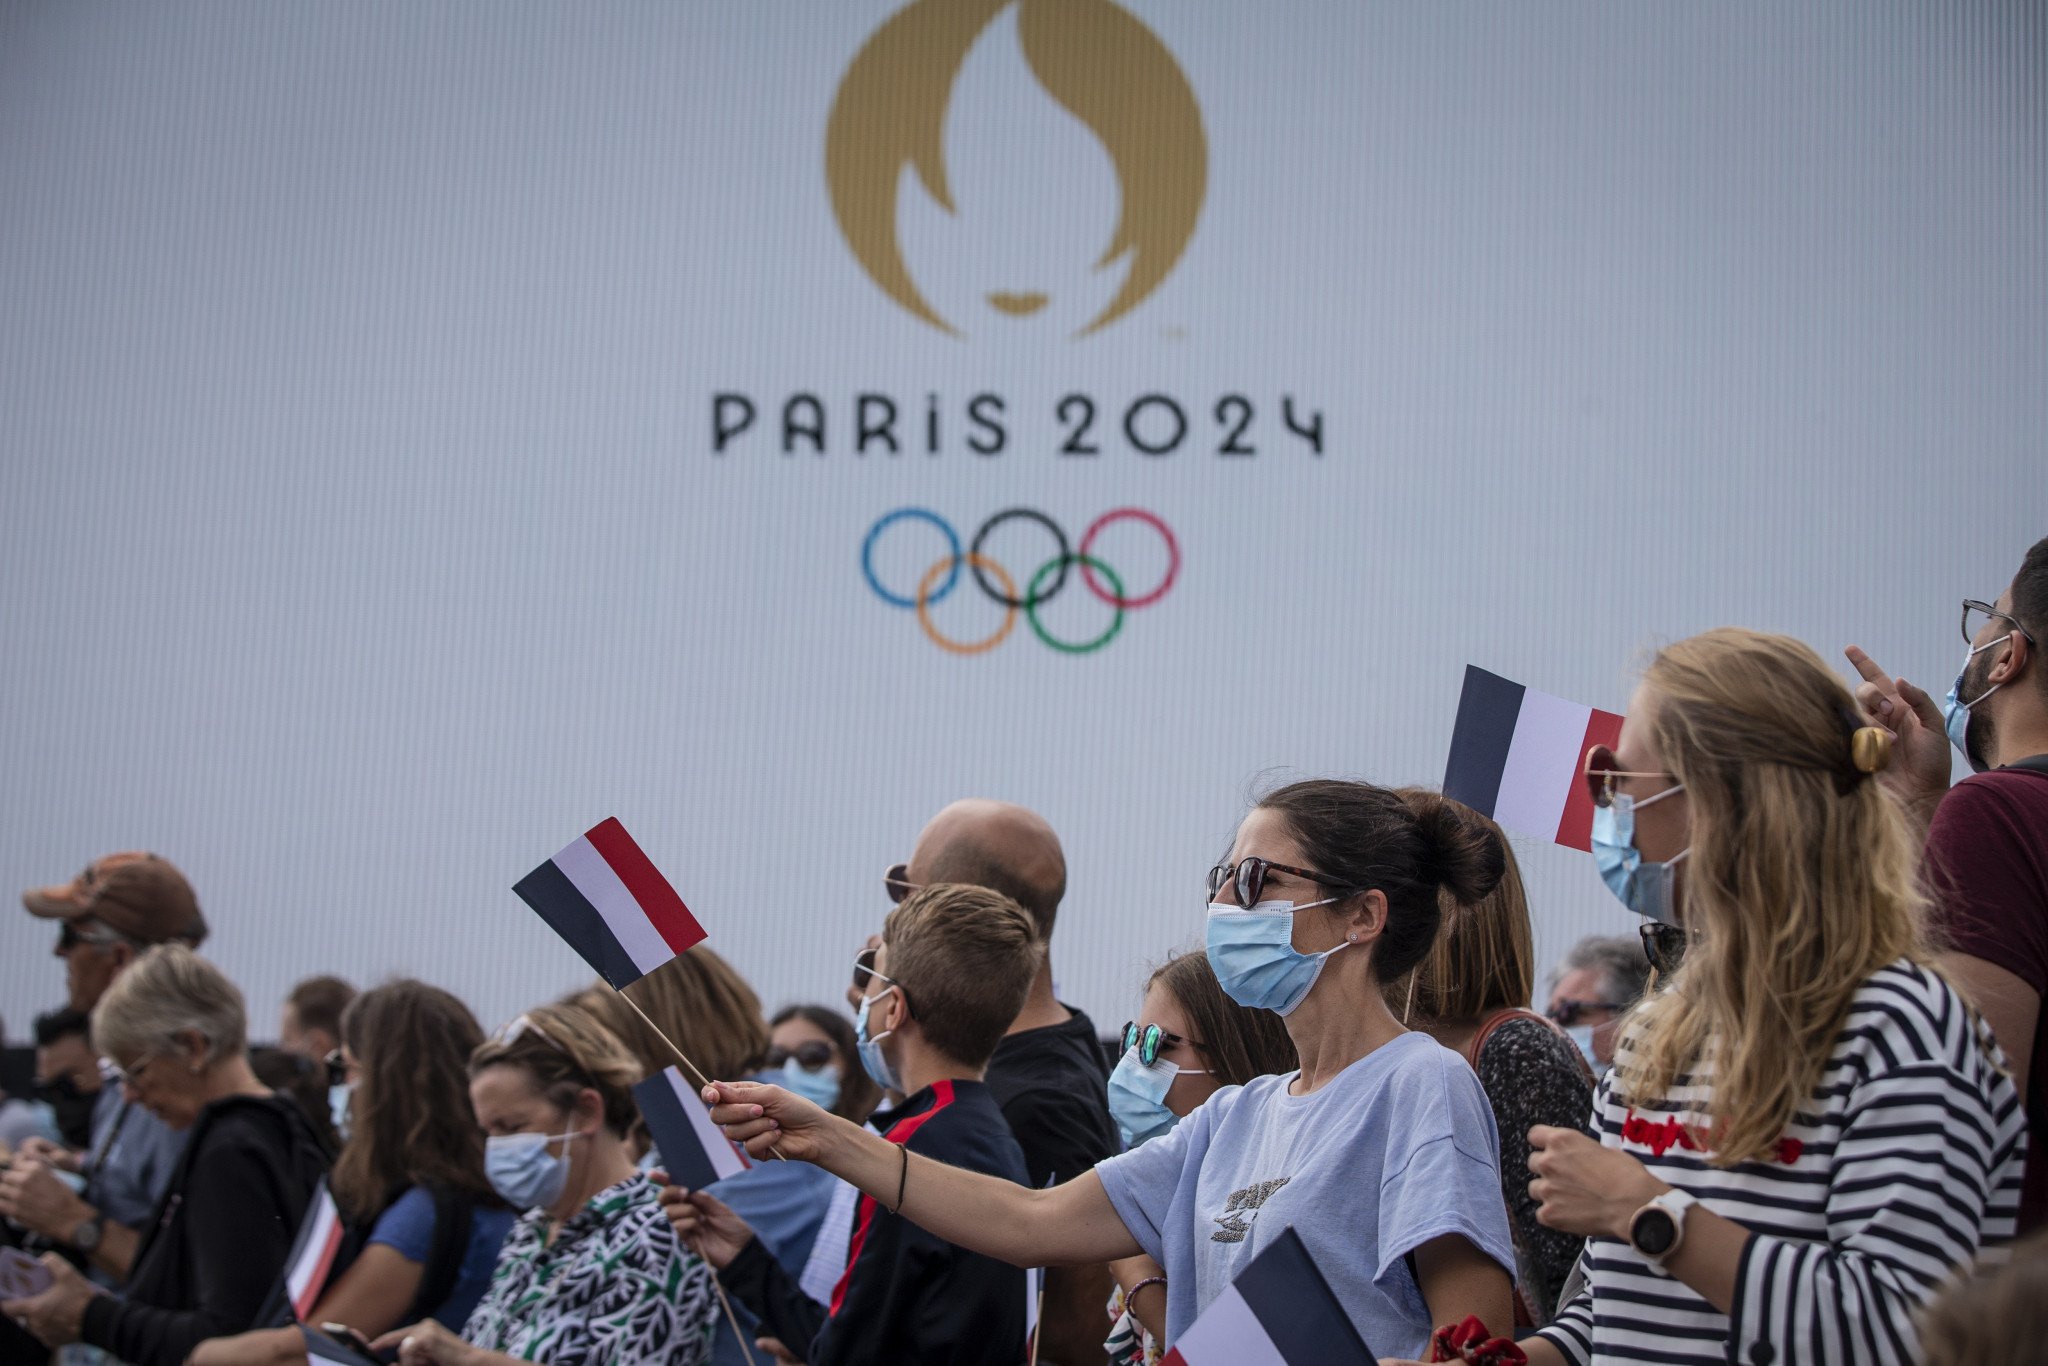 Paris 2024 has partnered with Île-de-France Mobilités for transport assistance at the Olympics ©Getty Images